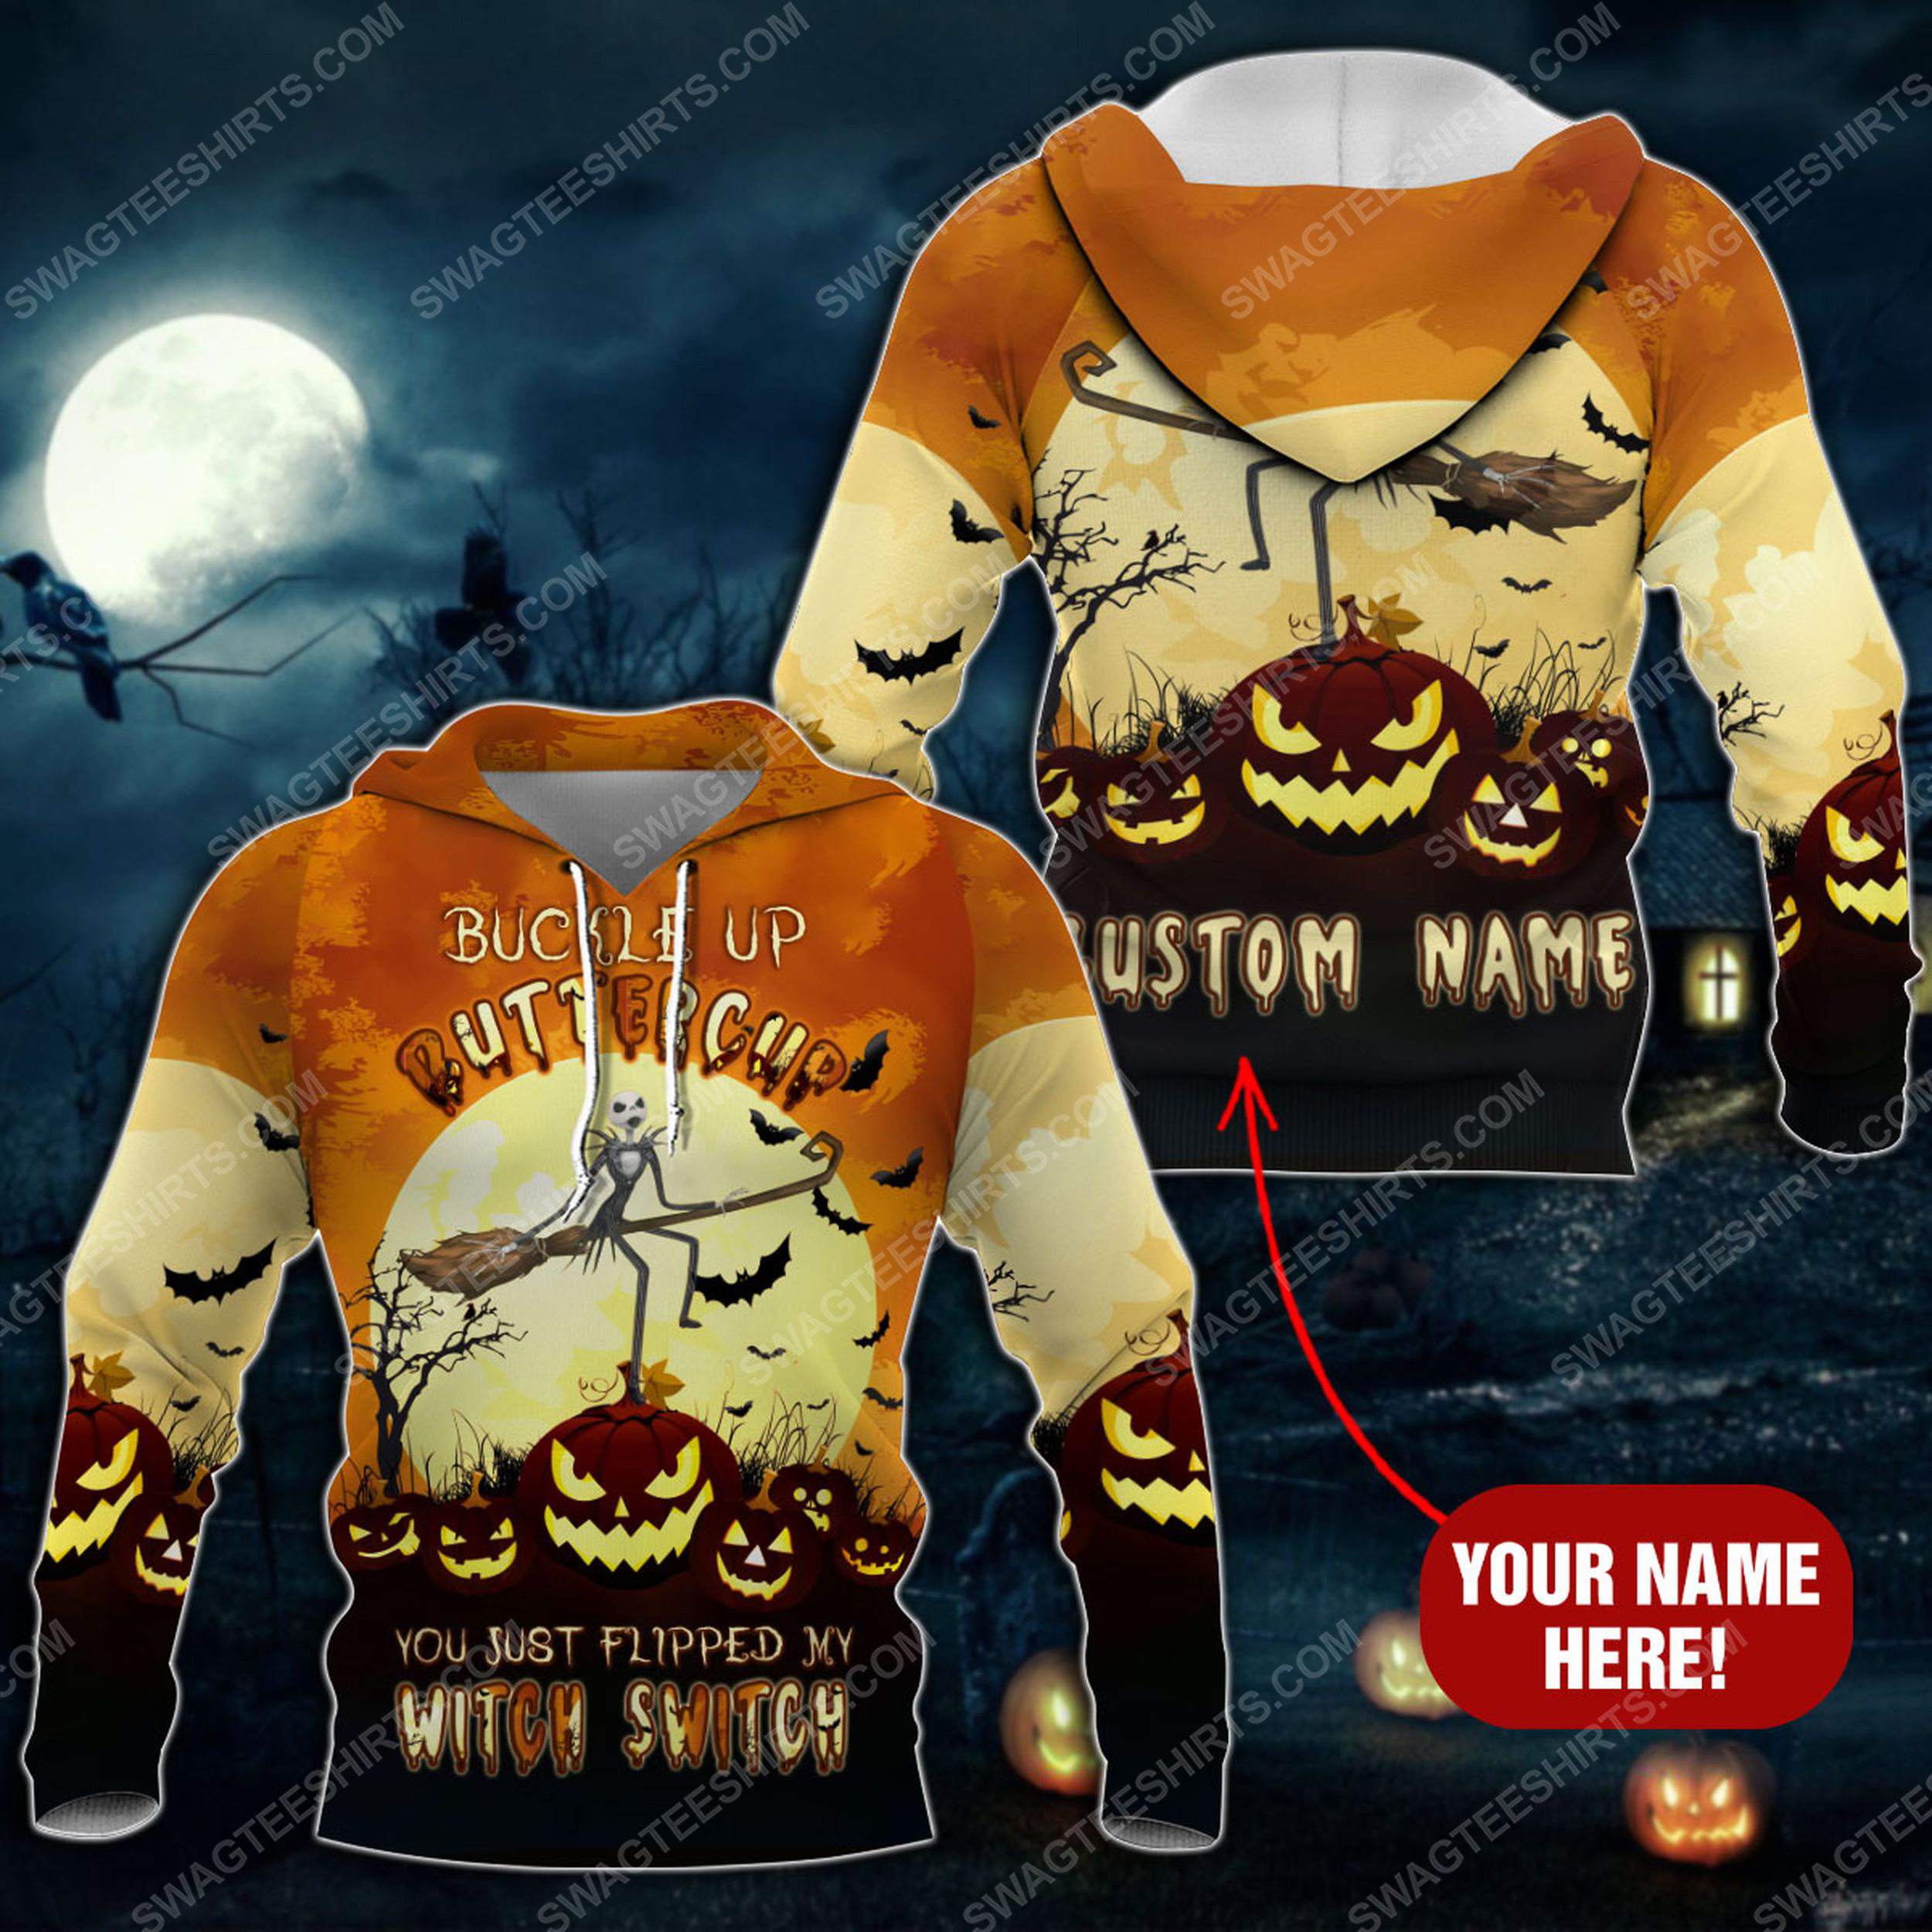 Custom buckle up buttercup you just flipped my witch switch pumpkin halloween shirt 2(1)